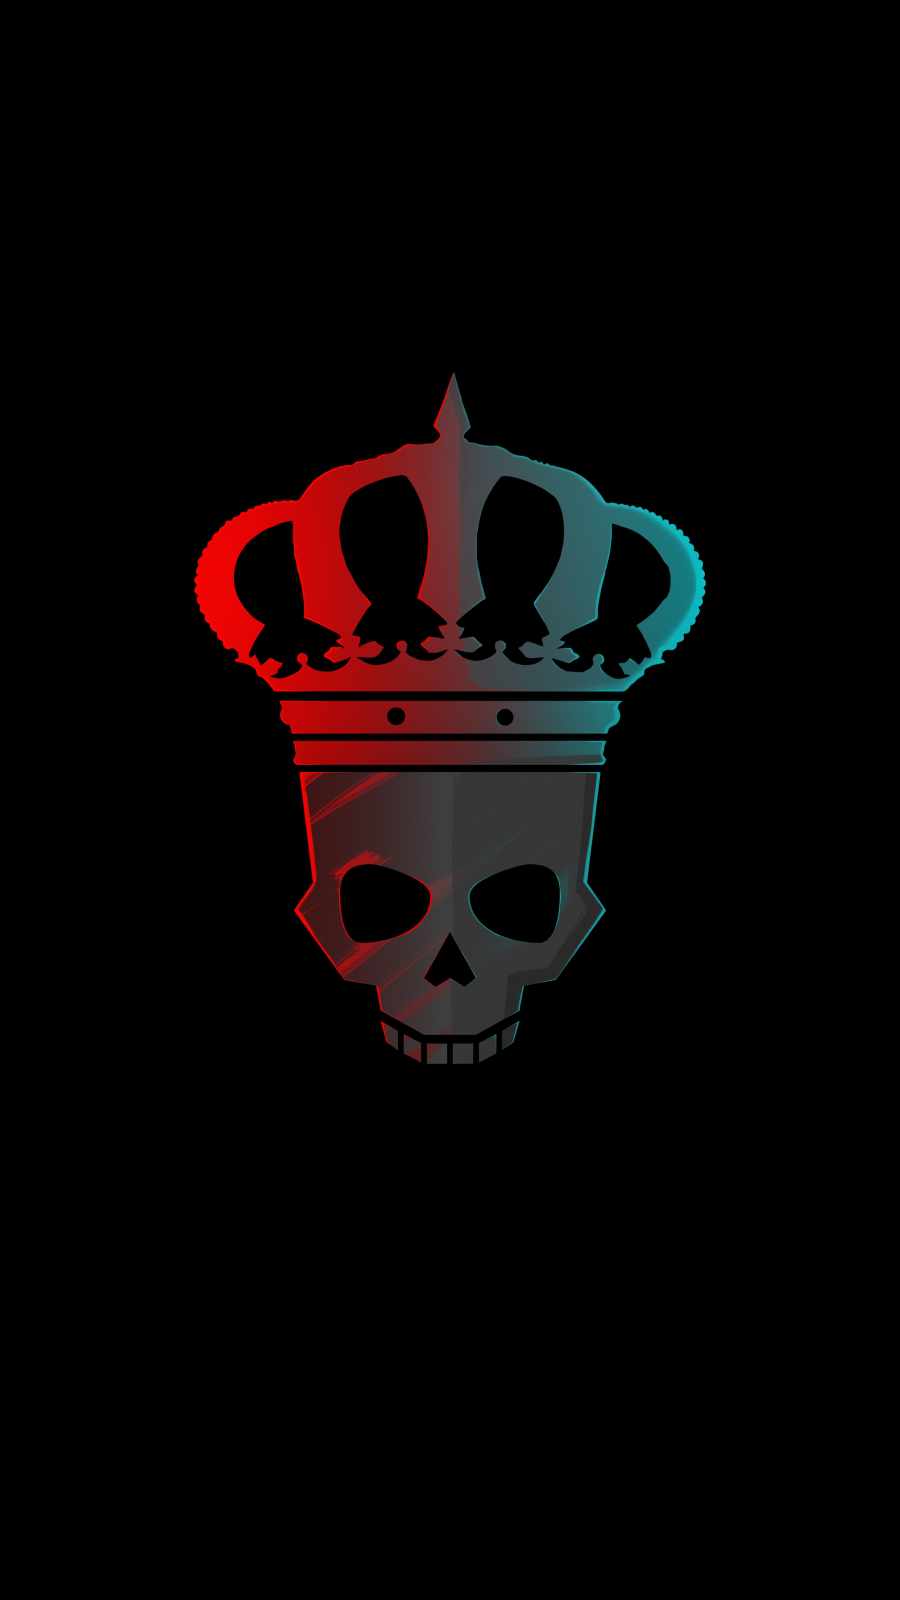 King Skull iPhone Wallpaper